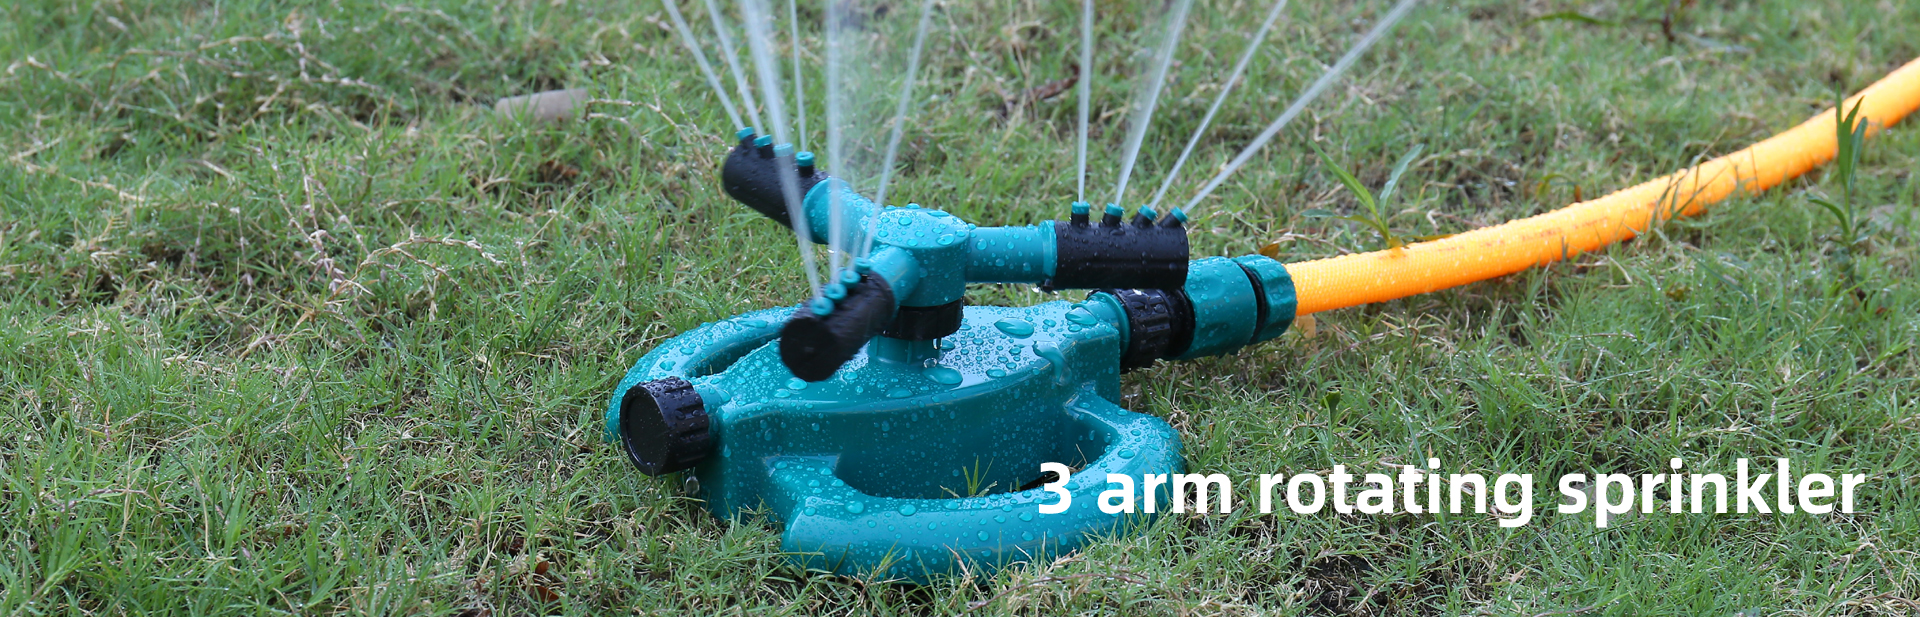 Garden lawn 3 arm Rotating Sprinkler